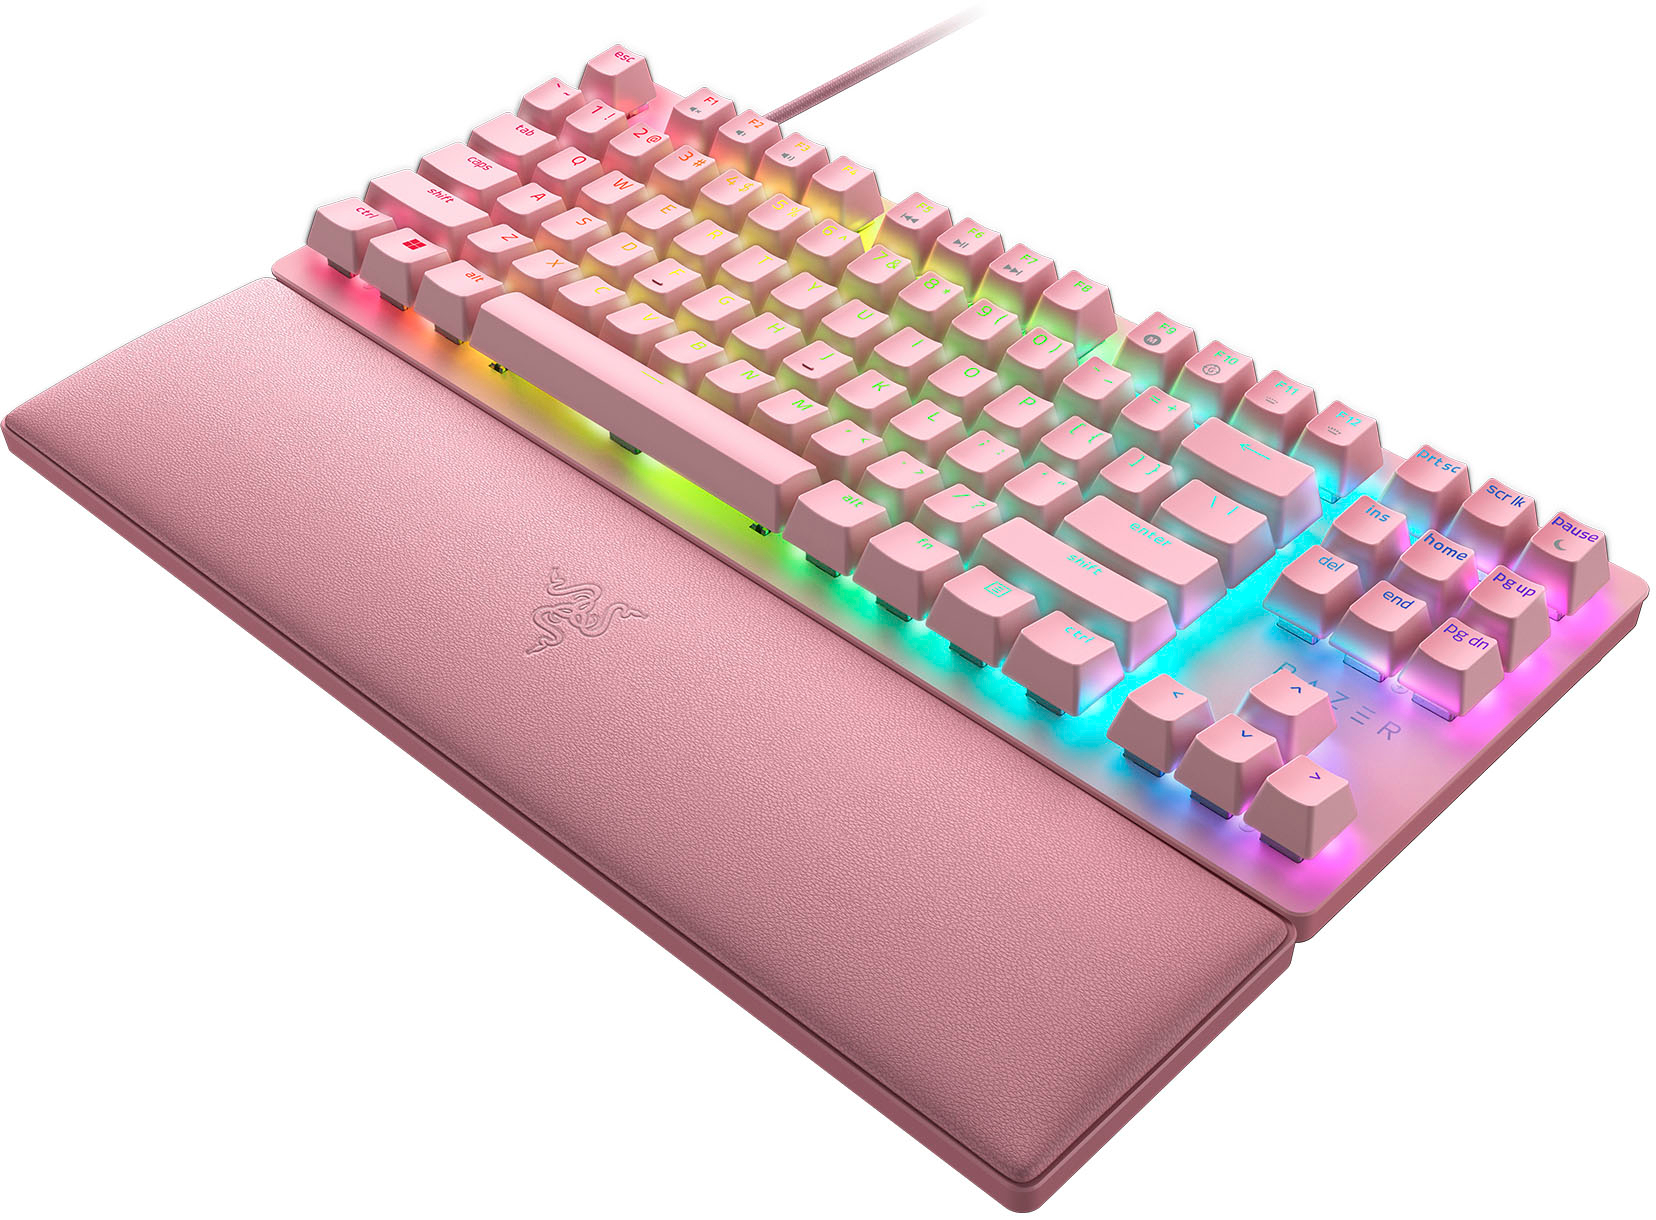 Razer Huntsman V2 Tenkeyless Gaming Keyboard Quartz Pink Linear Optical  Switches Gen2 Detachable Type-C Cable PBT Keycaps